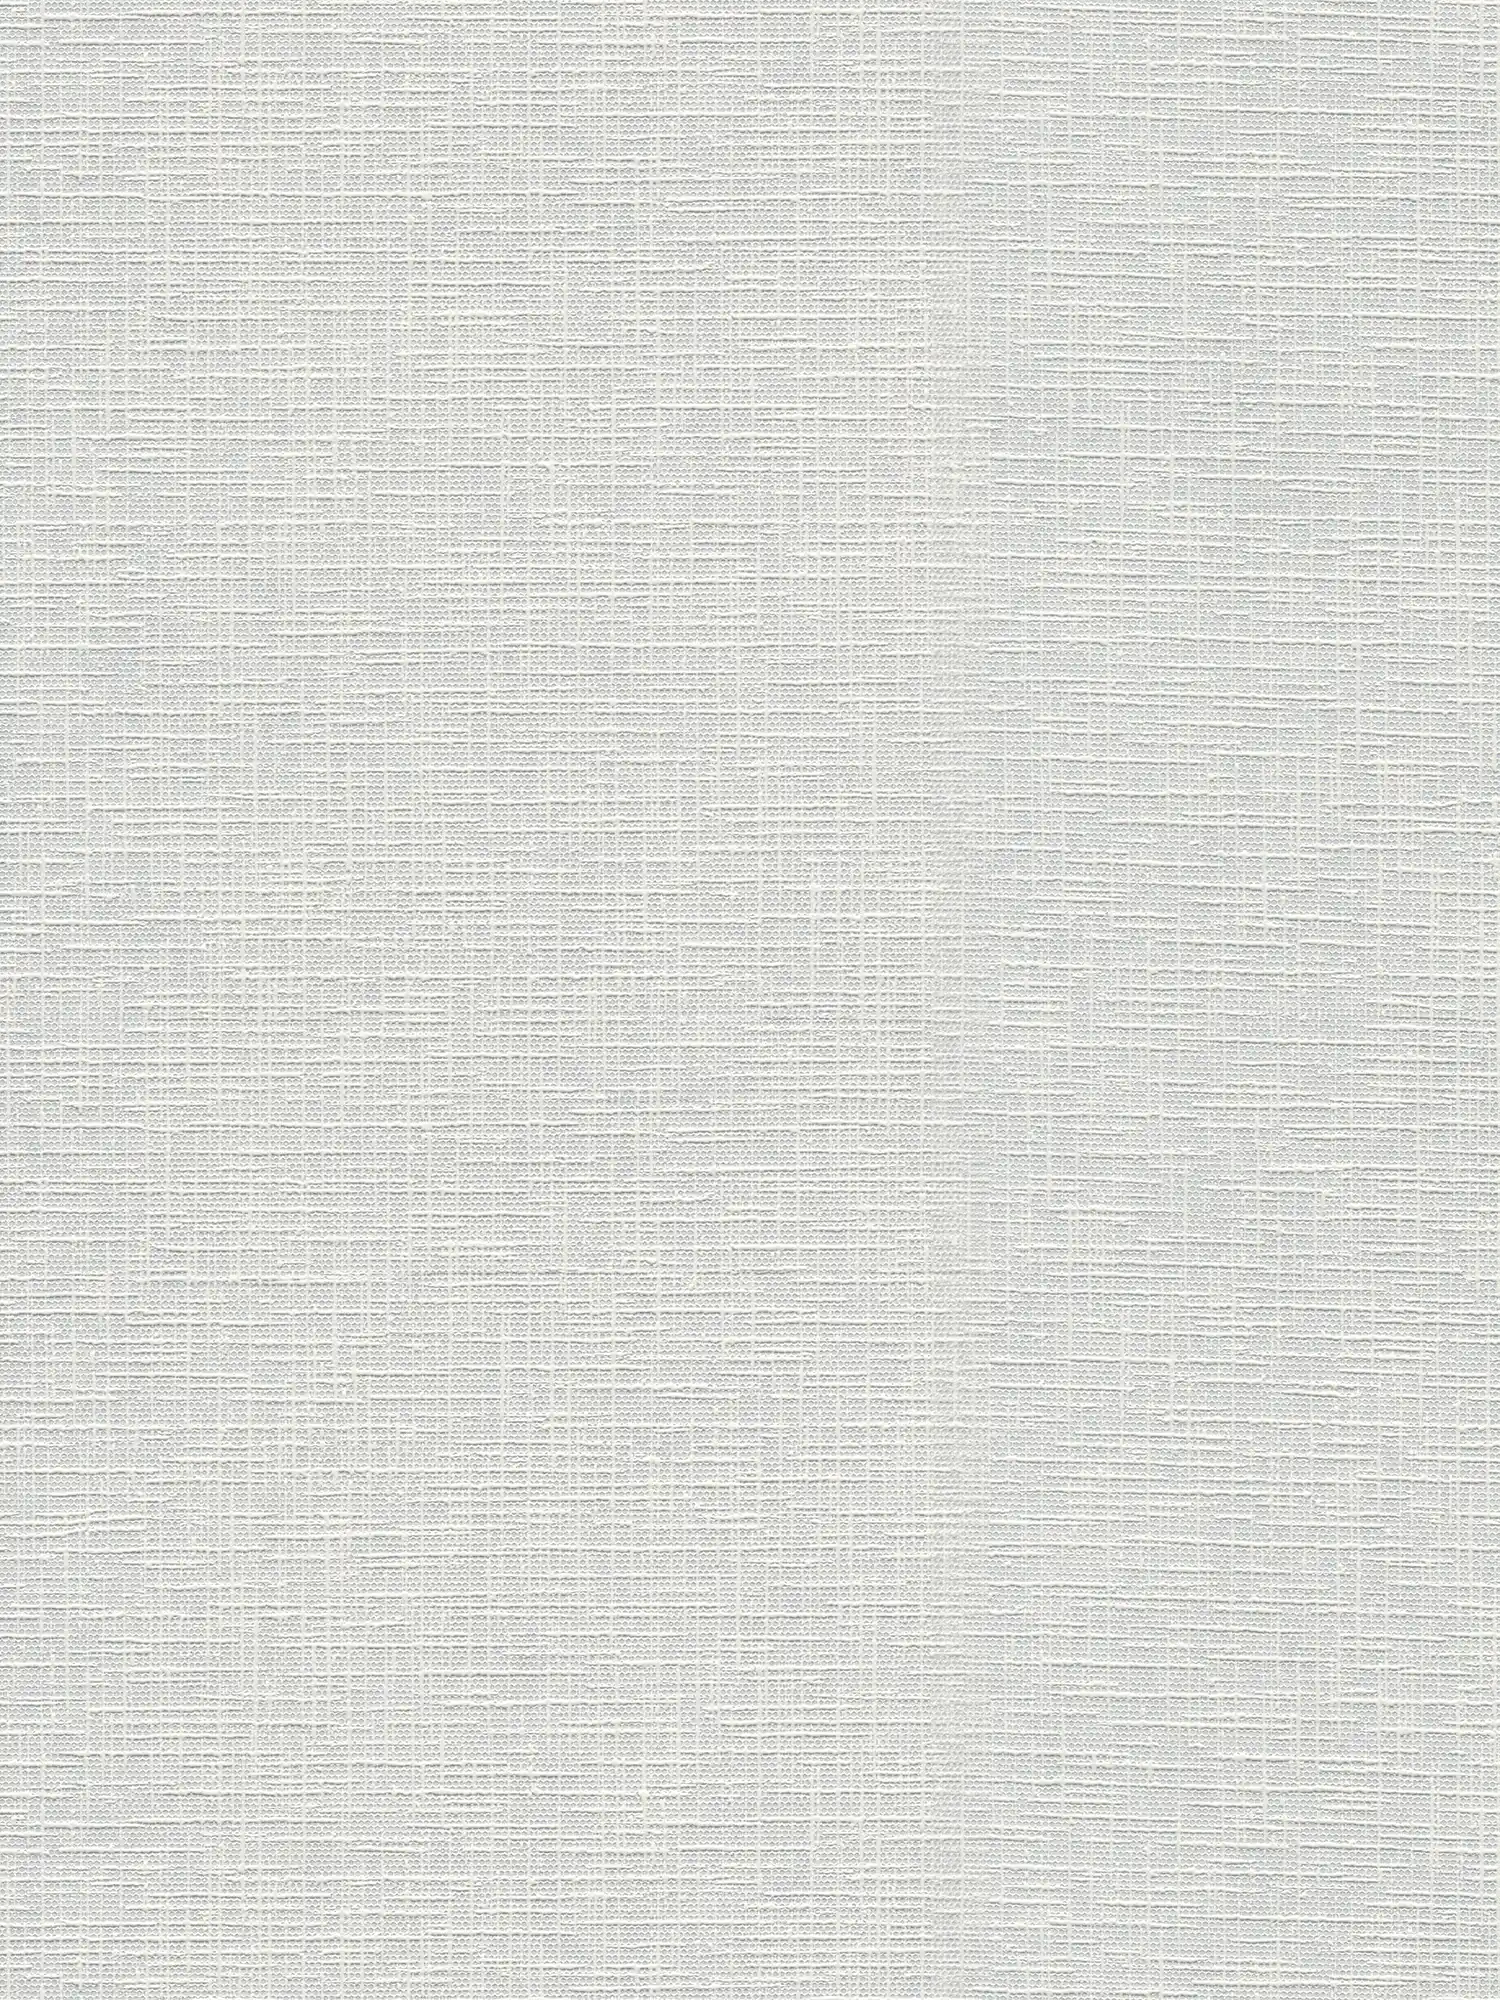 Papel pintado con estructura de tela en aspecto de lino
